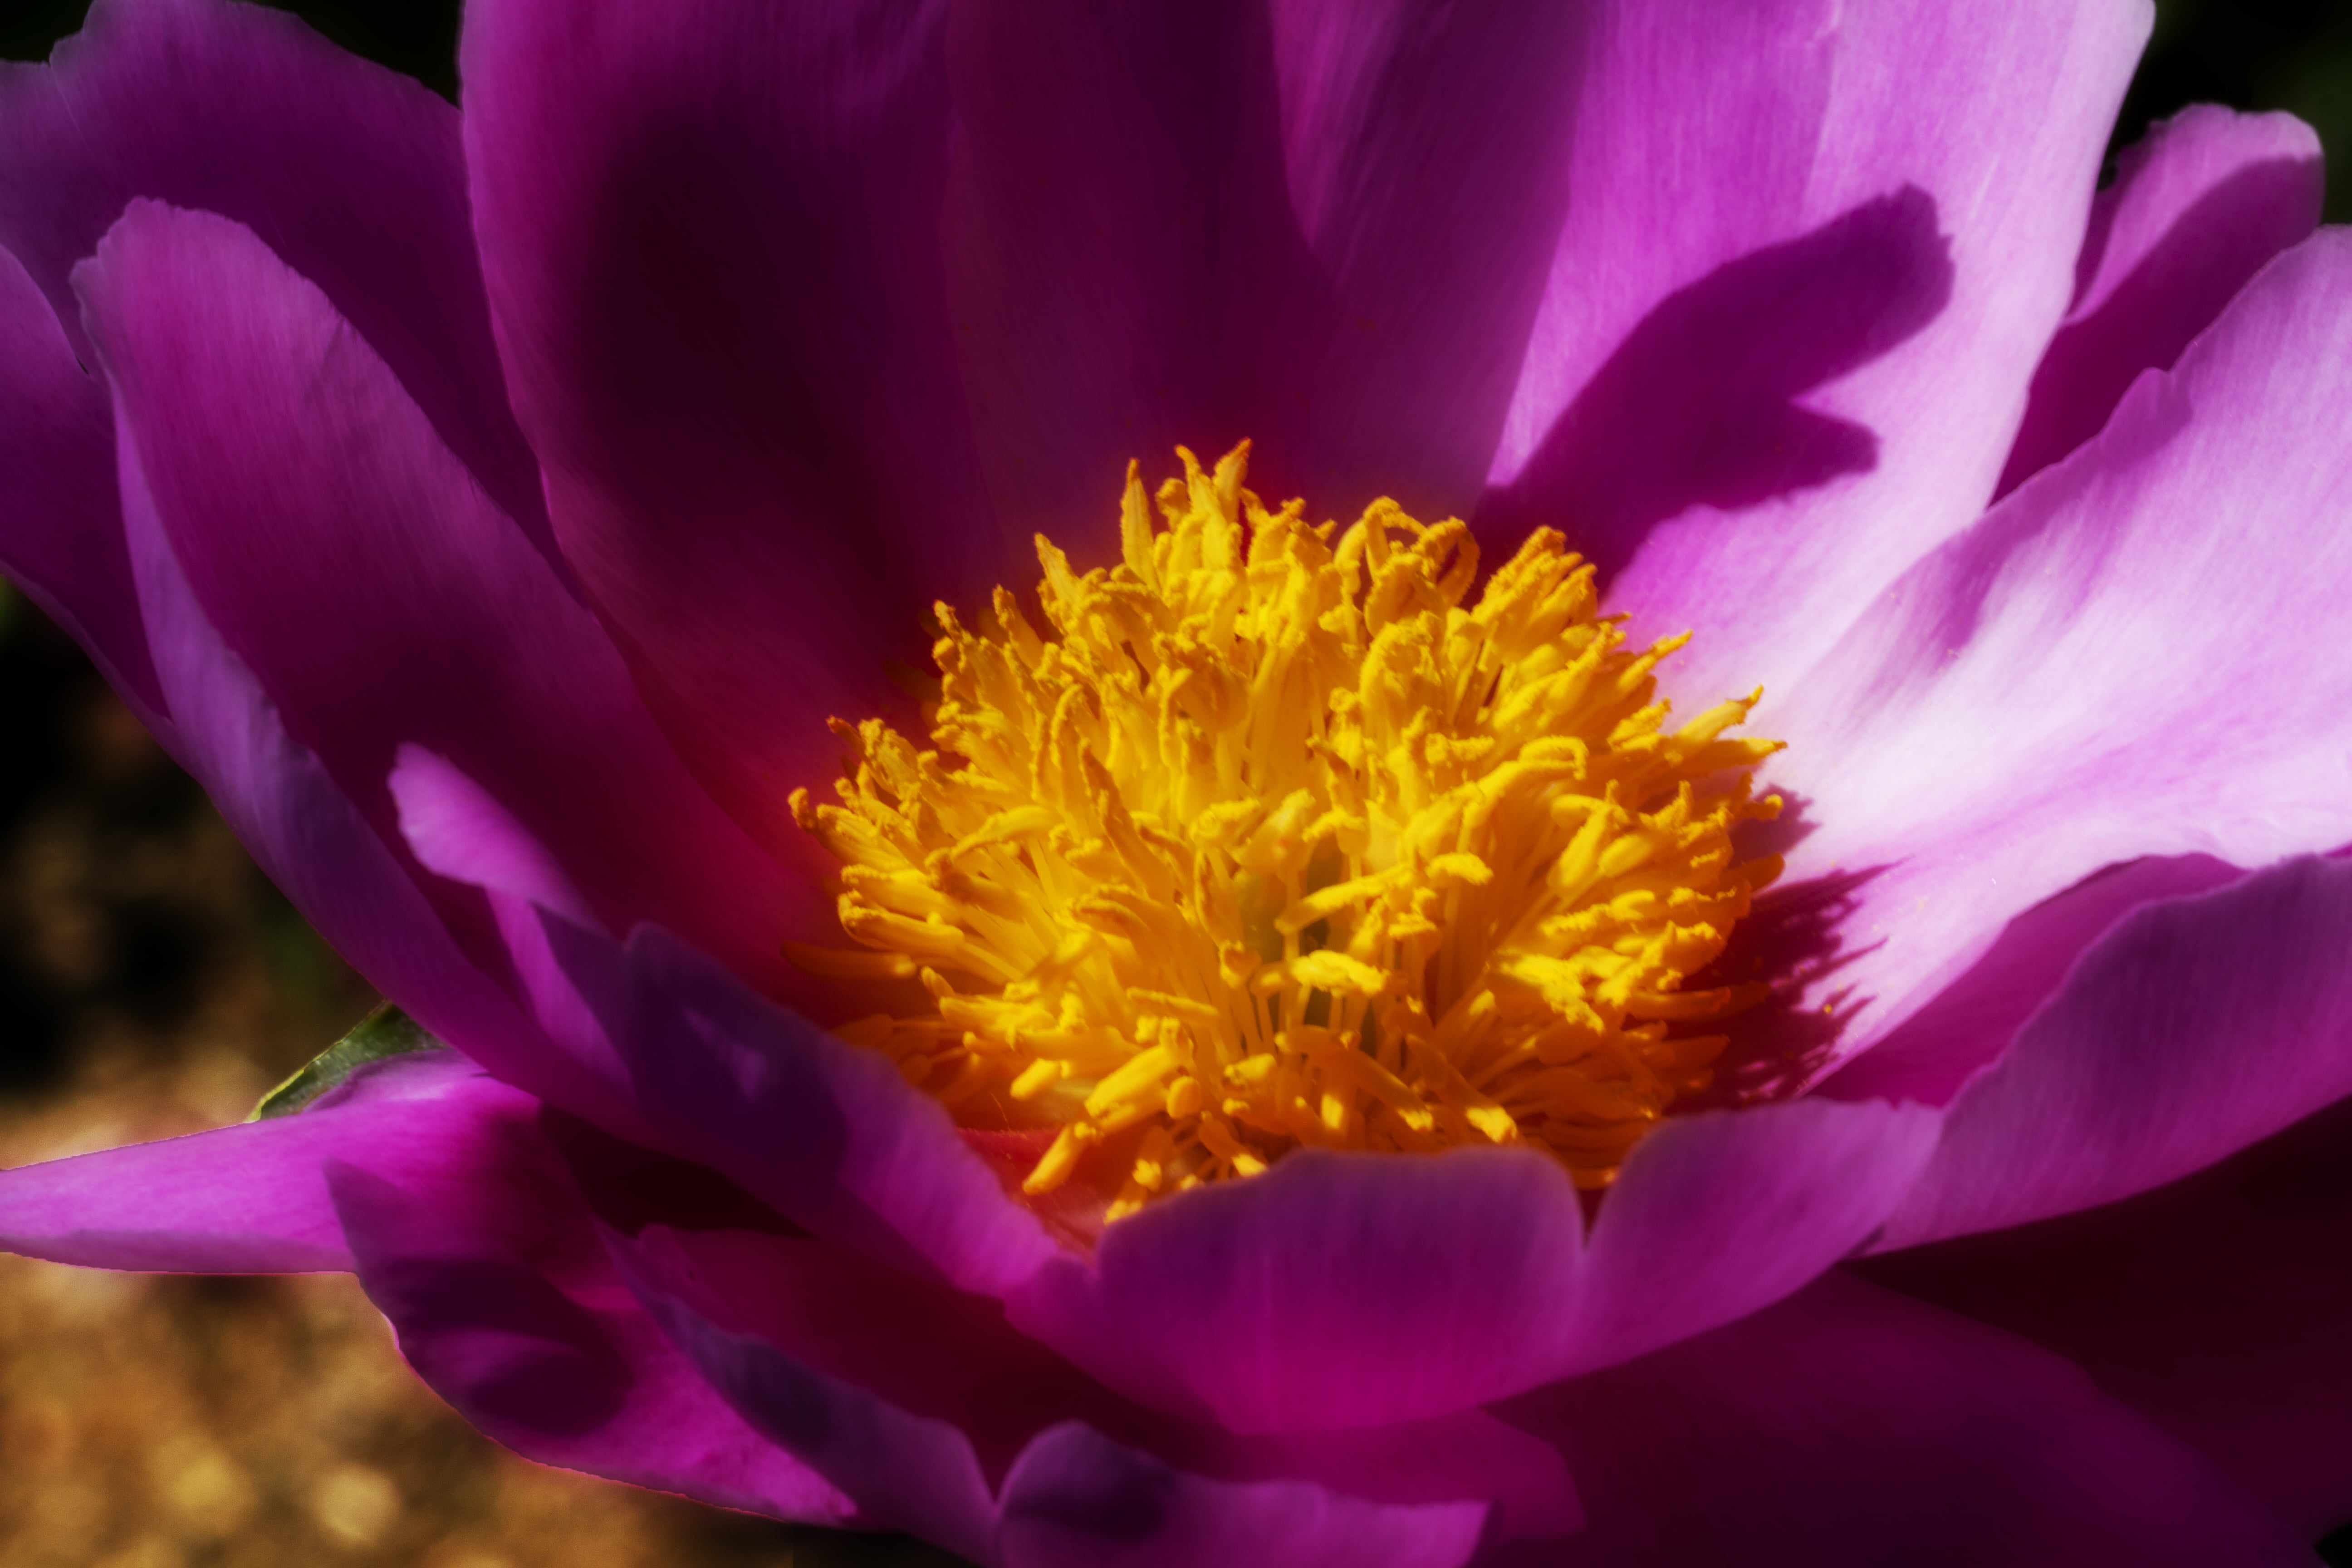 shallow focus on a purple flower with orange pollen, peony